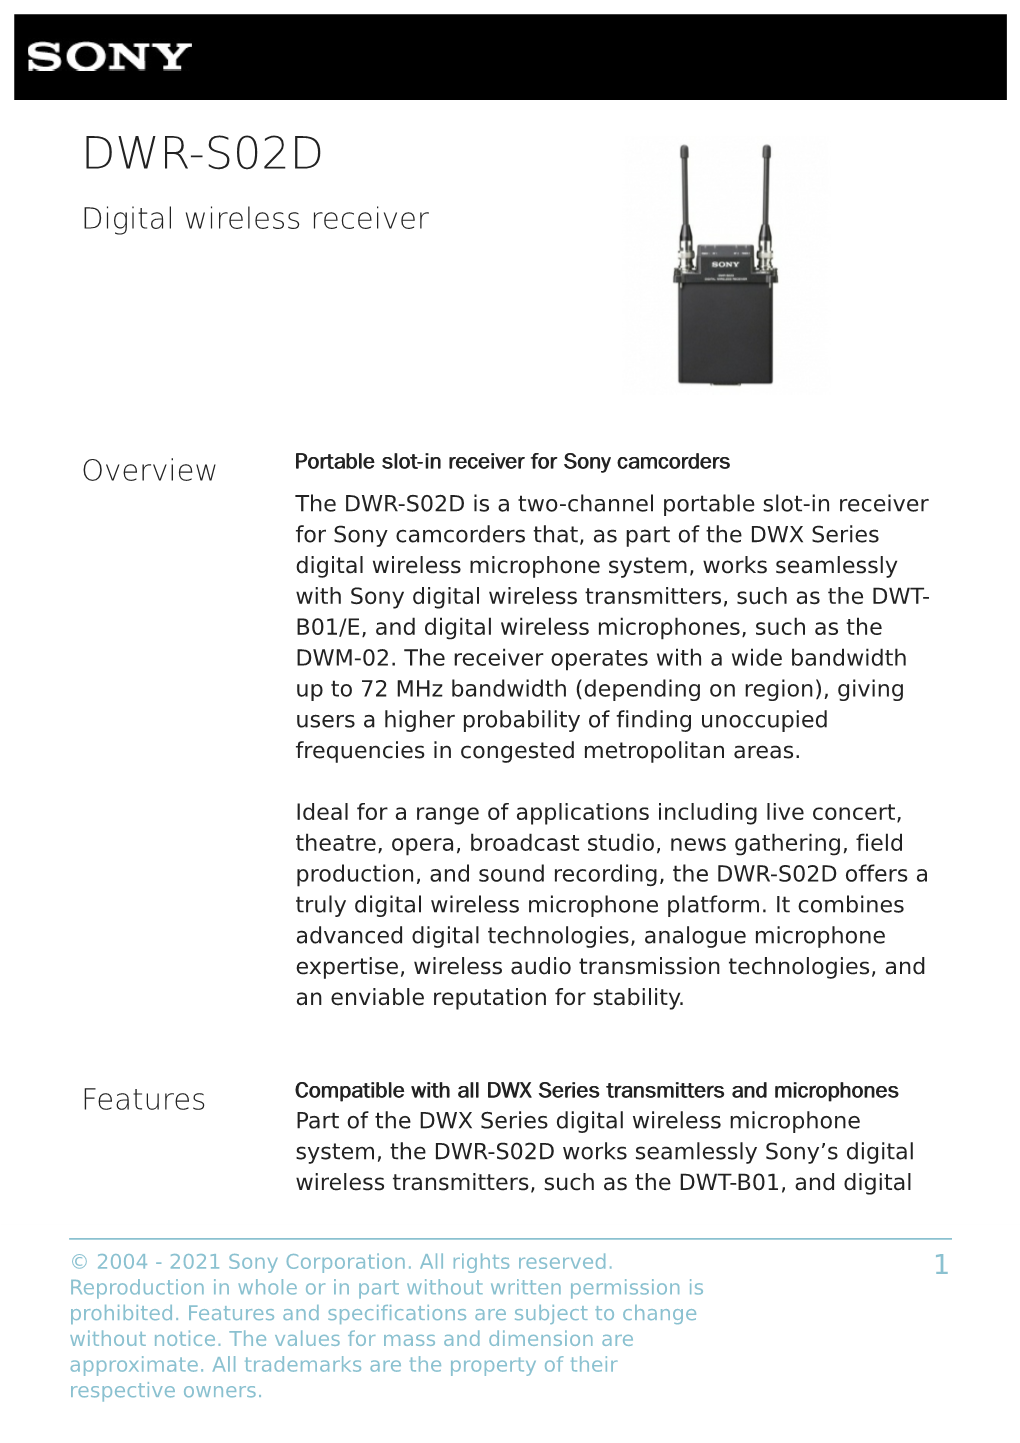 DWR-S02D Digital Wireless Receiver